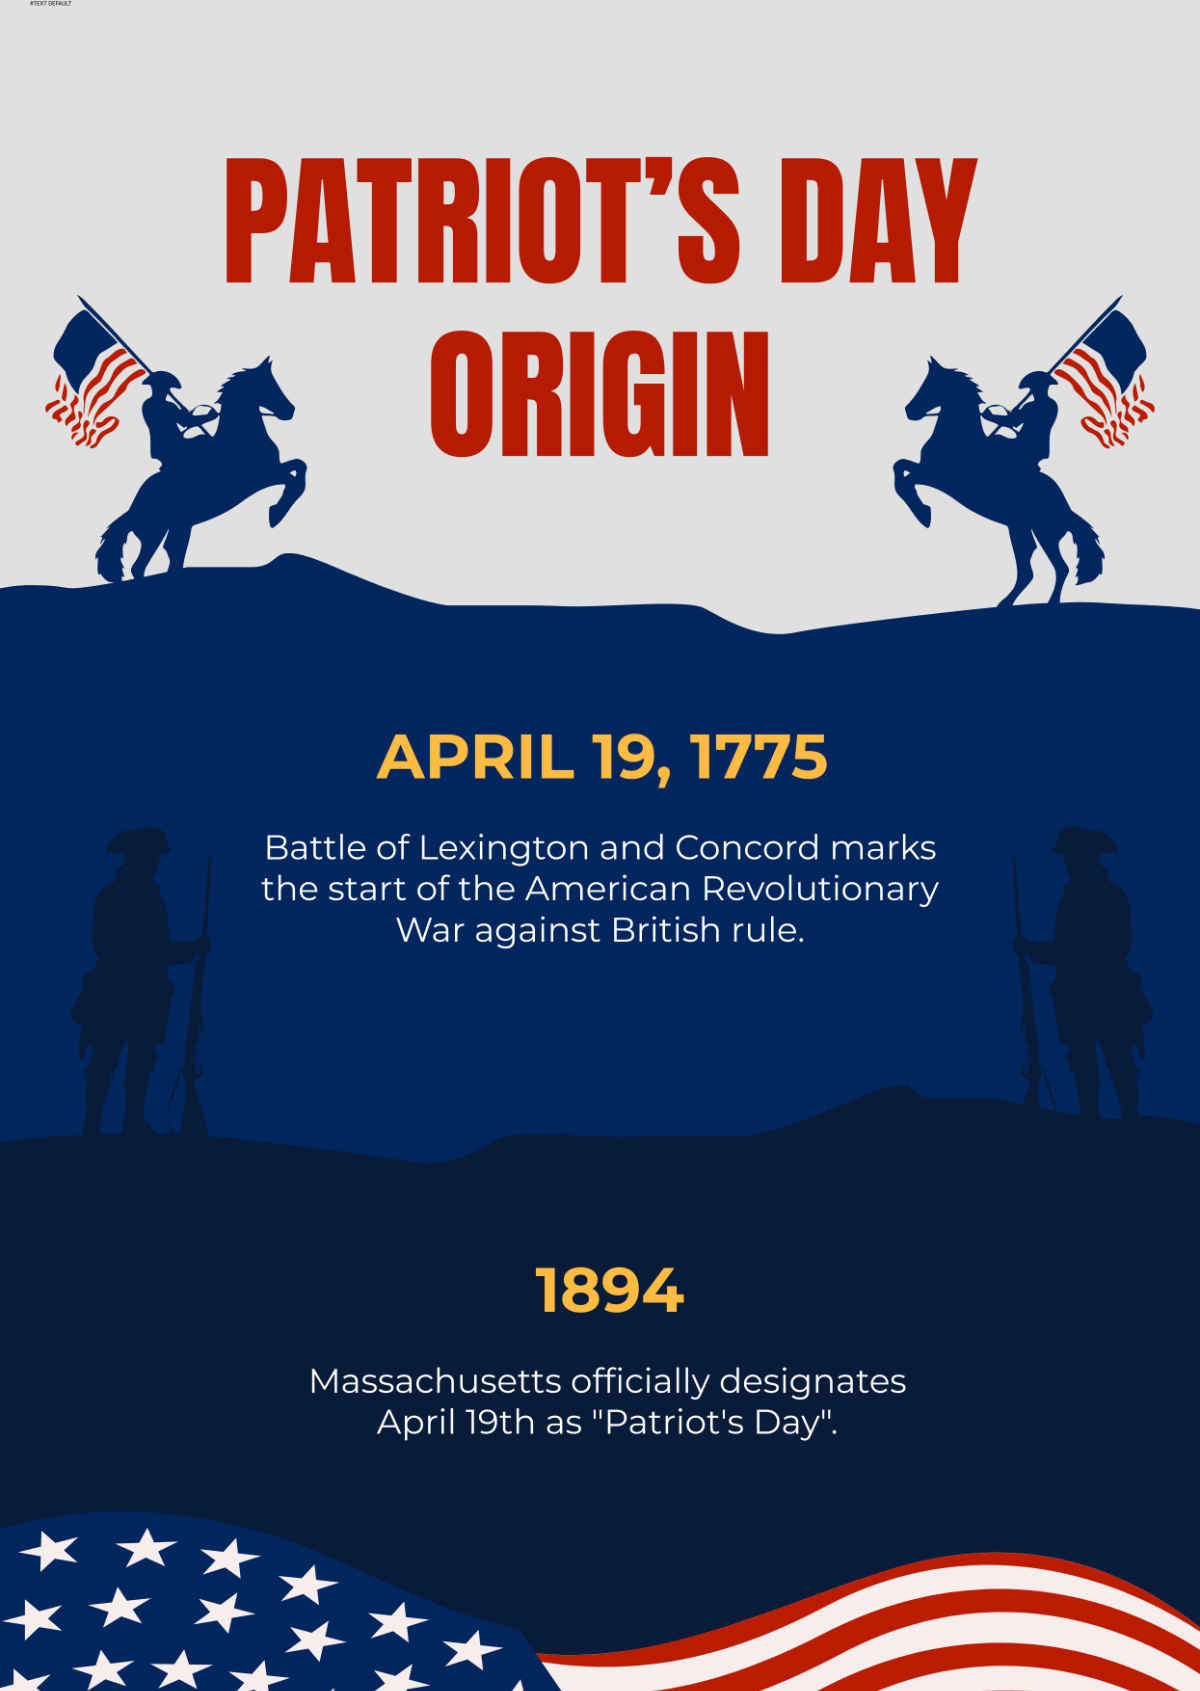 Free Patriot's Day Origin Template